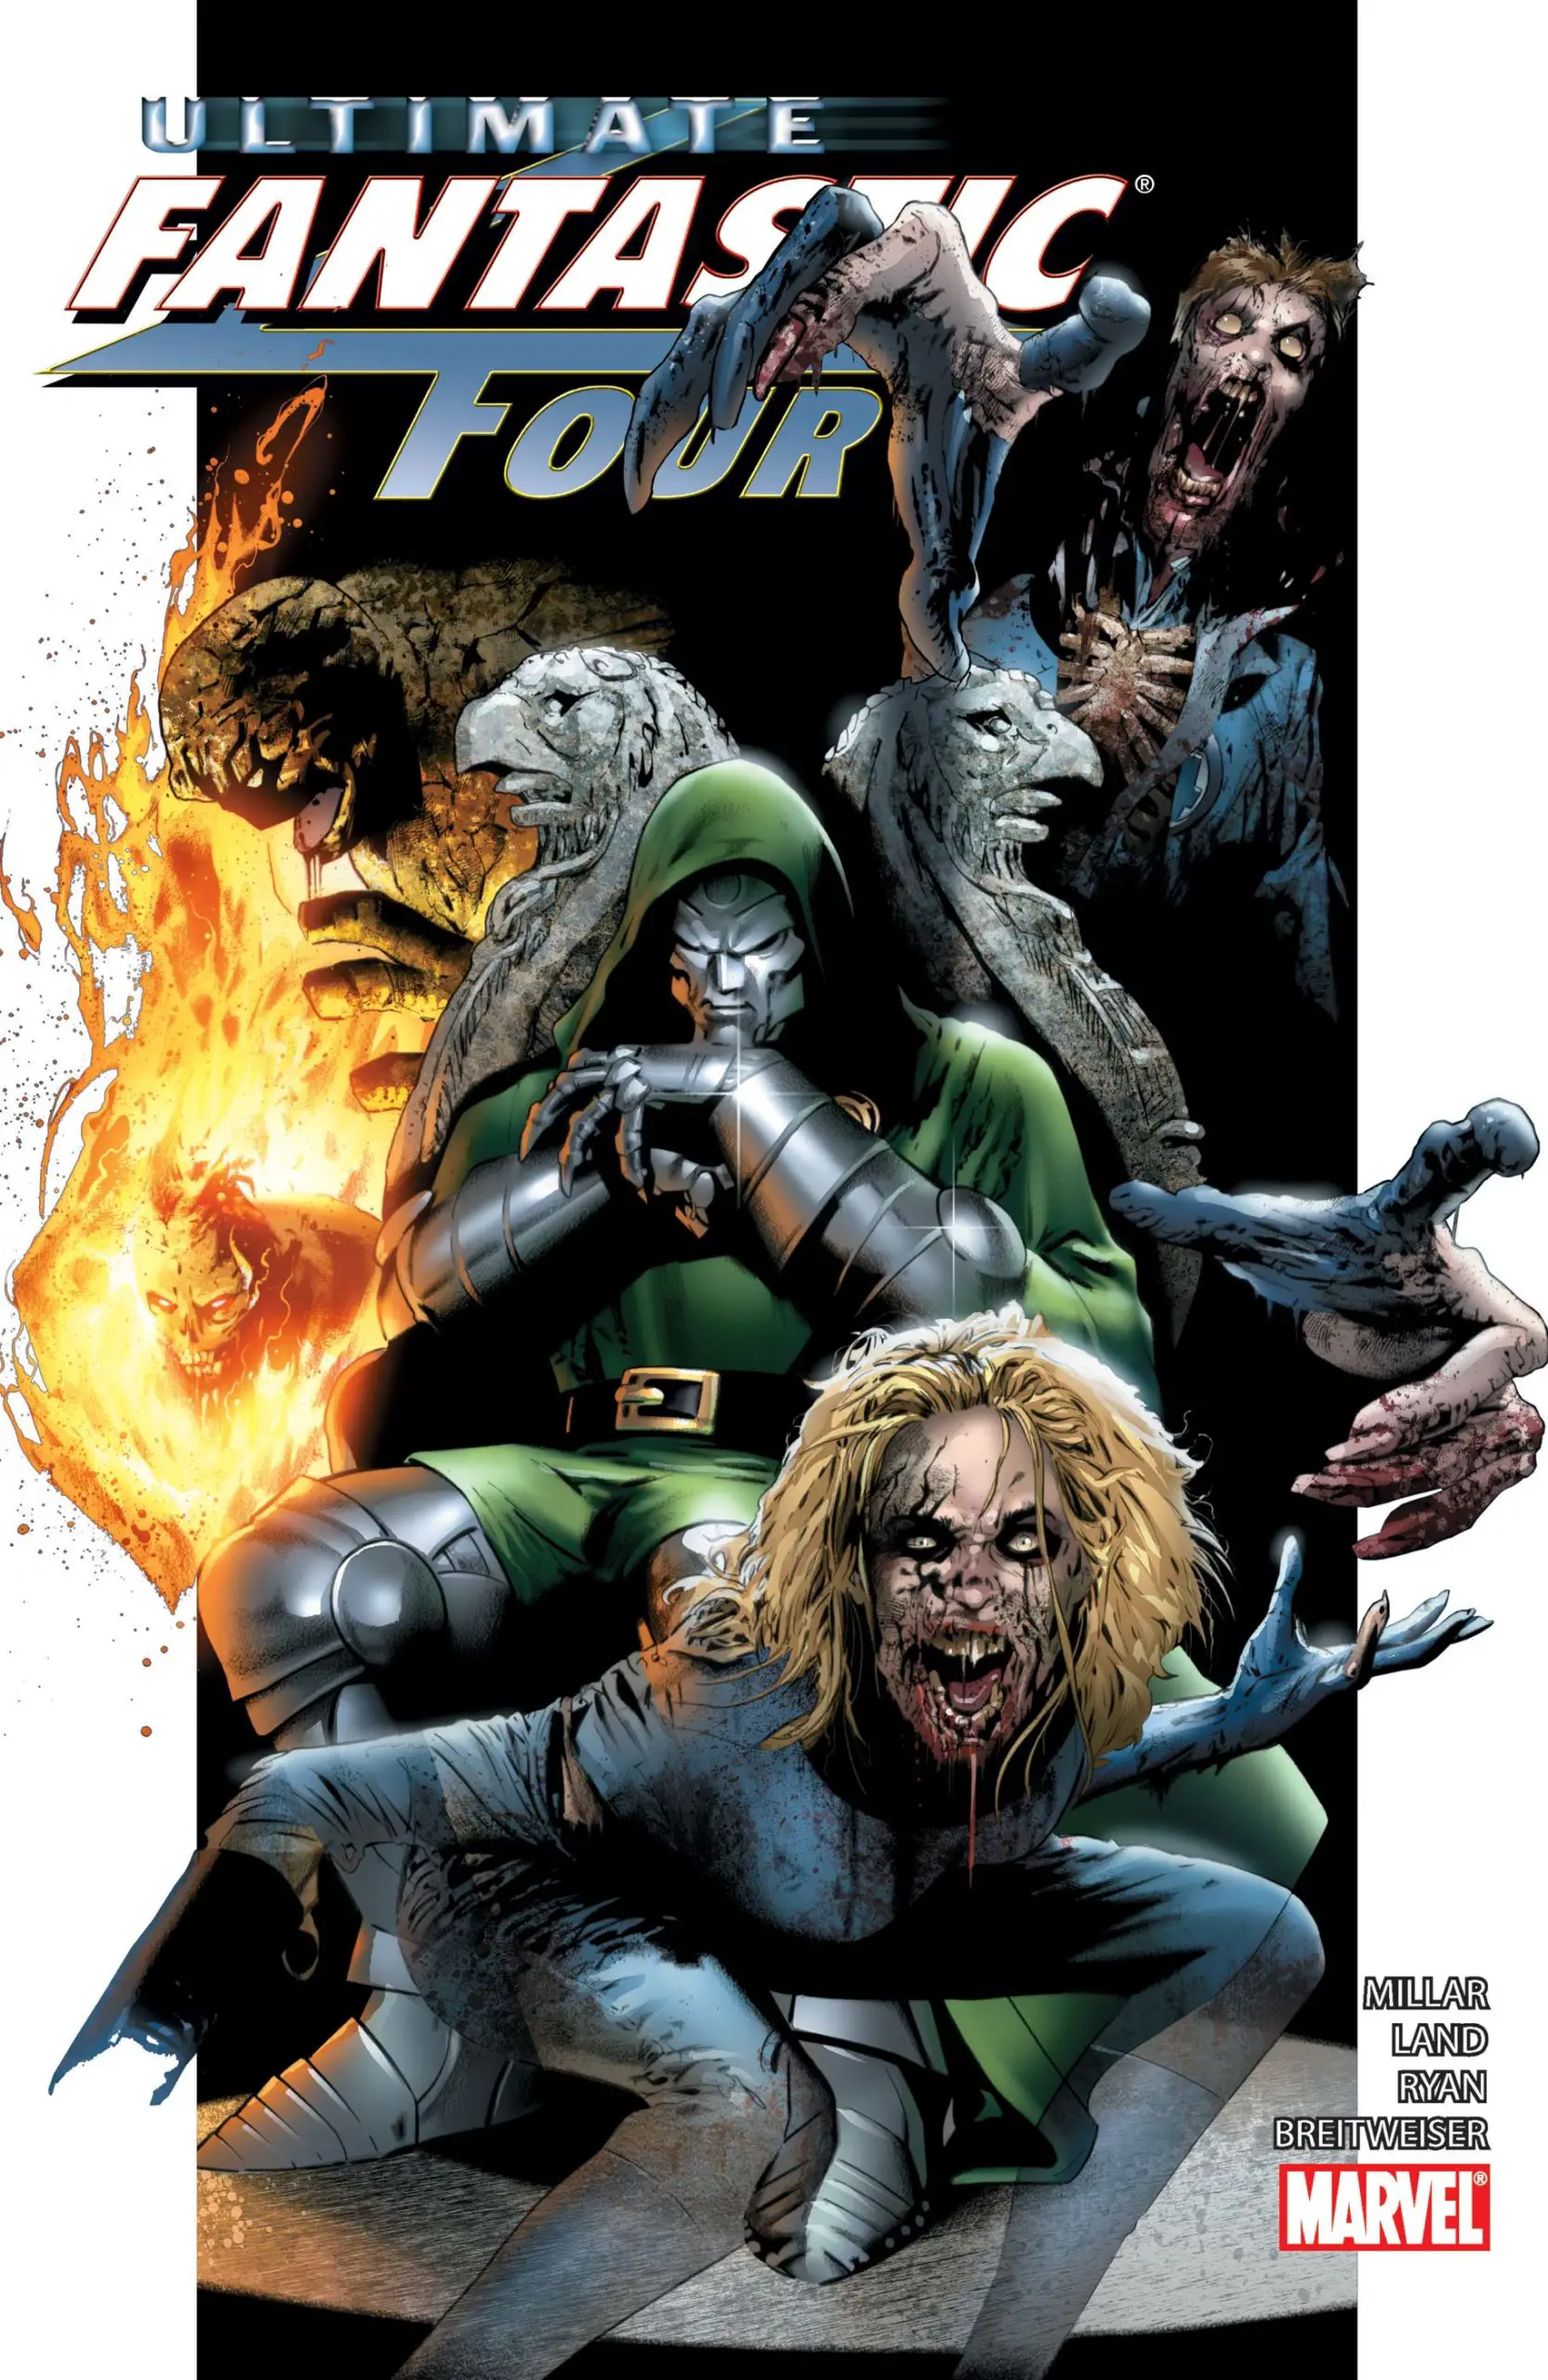 Ultimate Fantastic Four (2003) #30